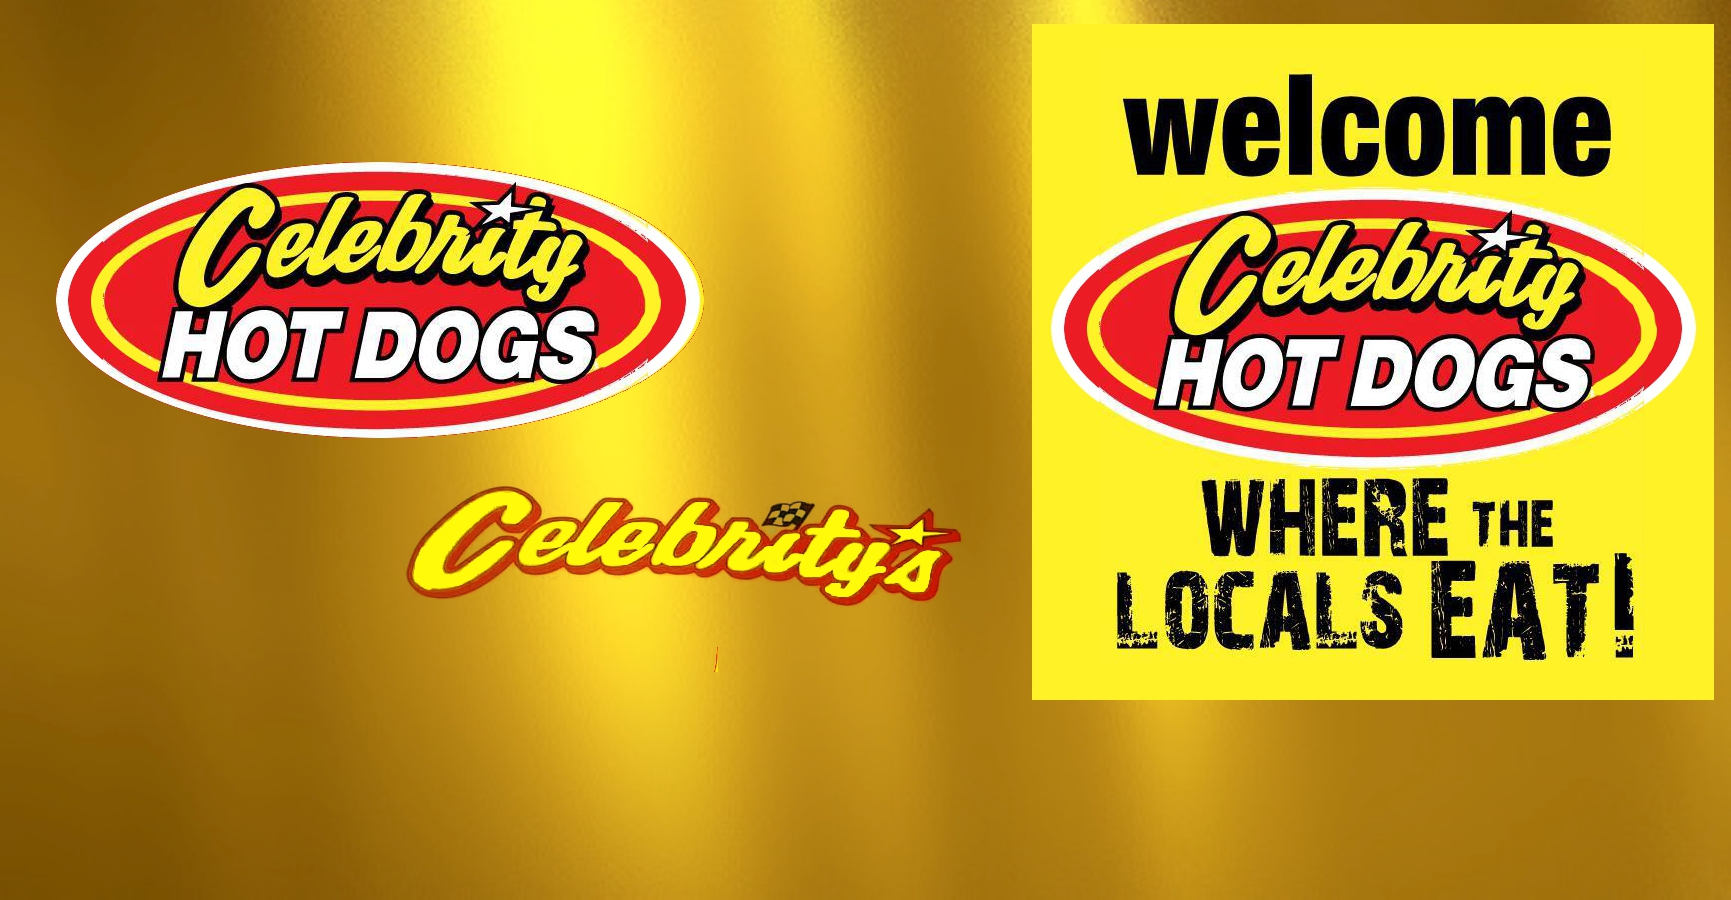 Celebrity's Hot Dogs.jpg